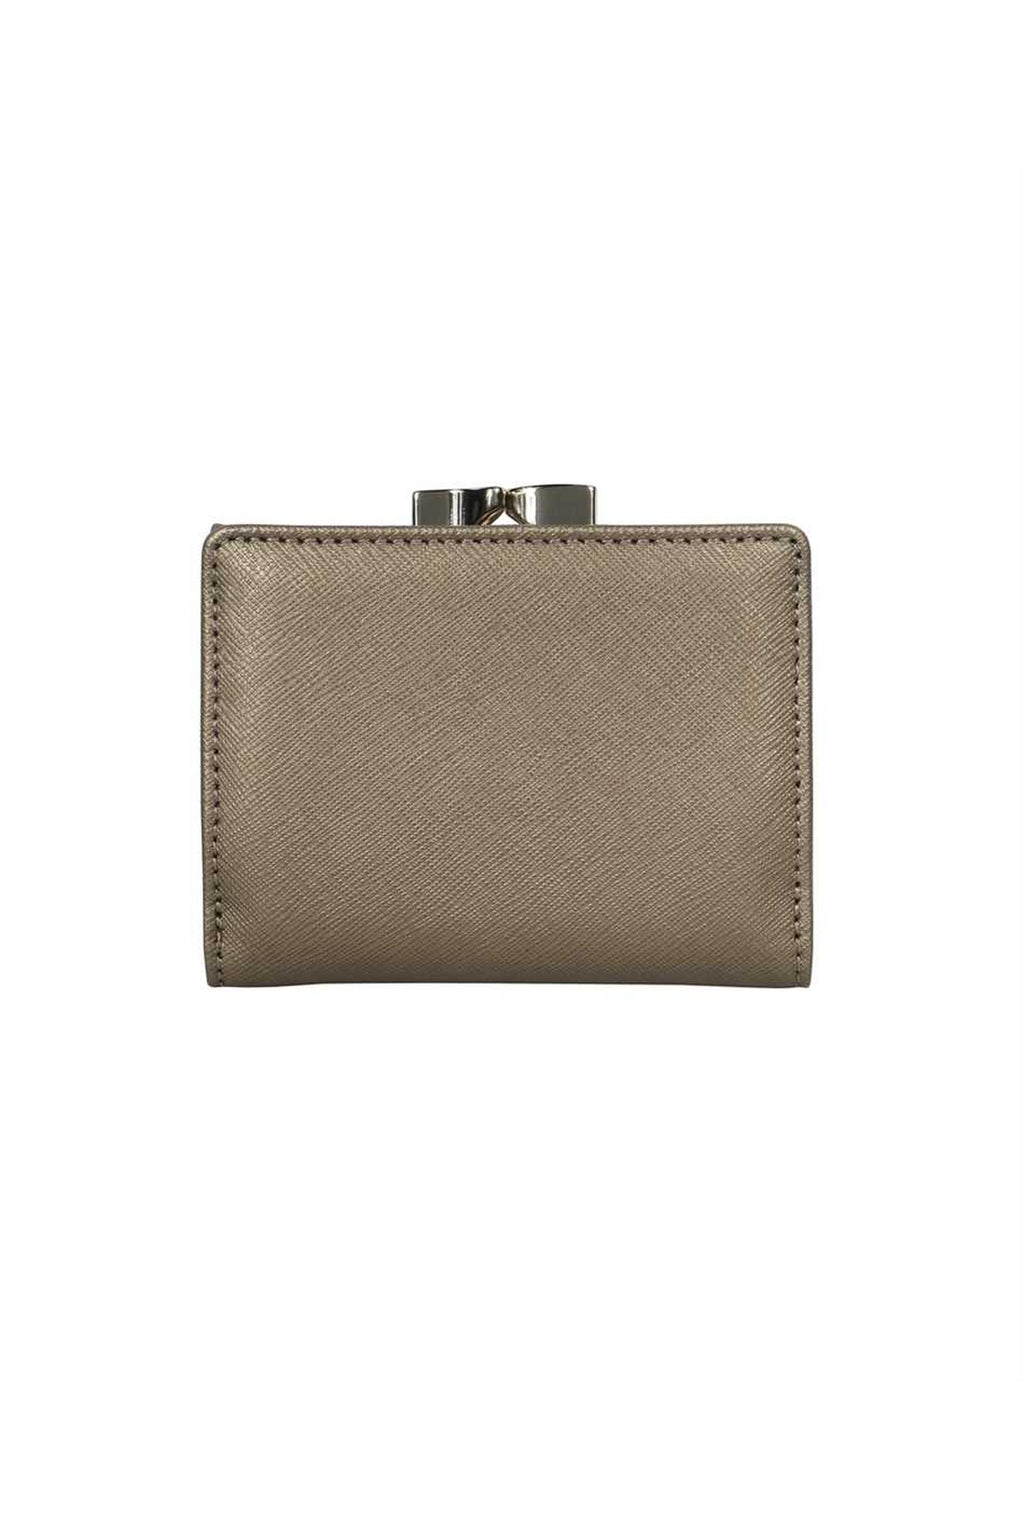 Vivienne Westwood-OUTLET-SALE-Small leather flap-over wallet-ARCHIVIST